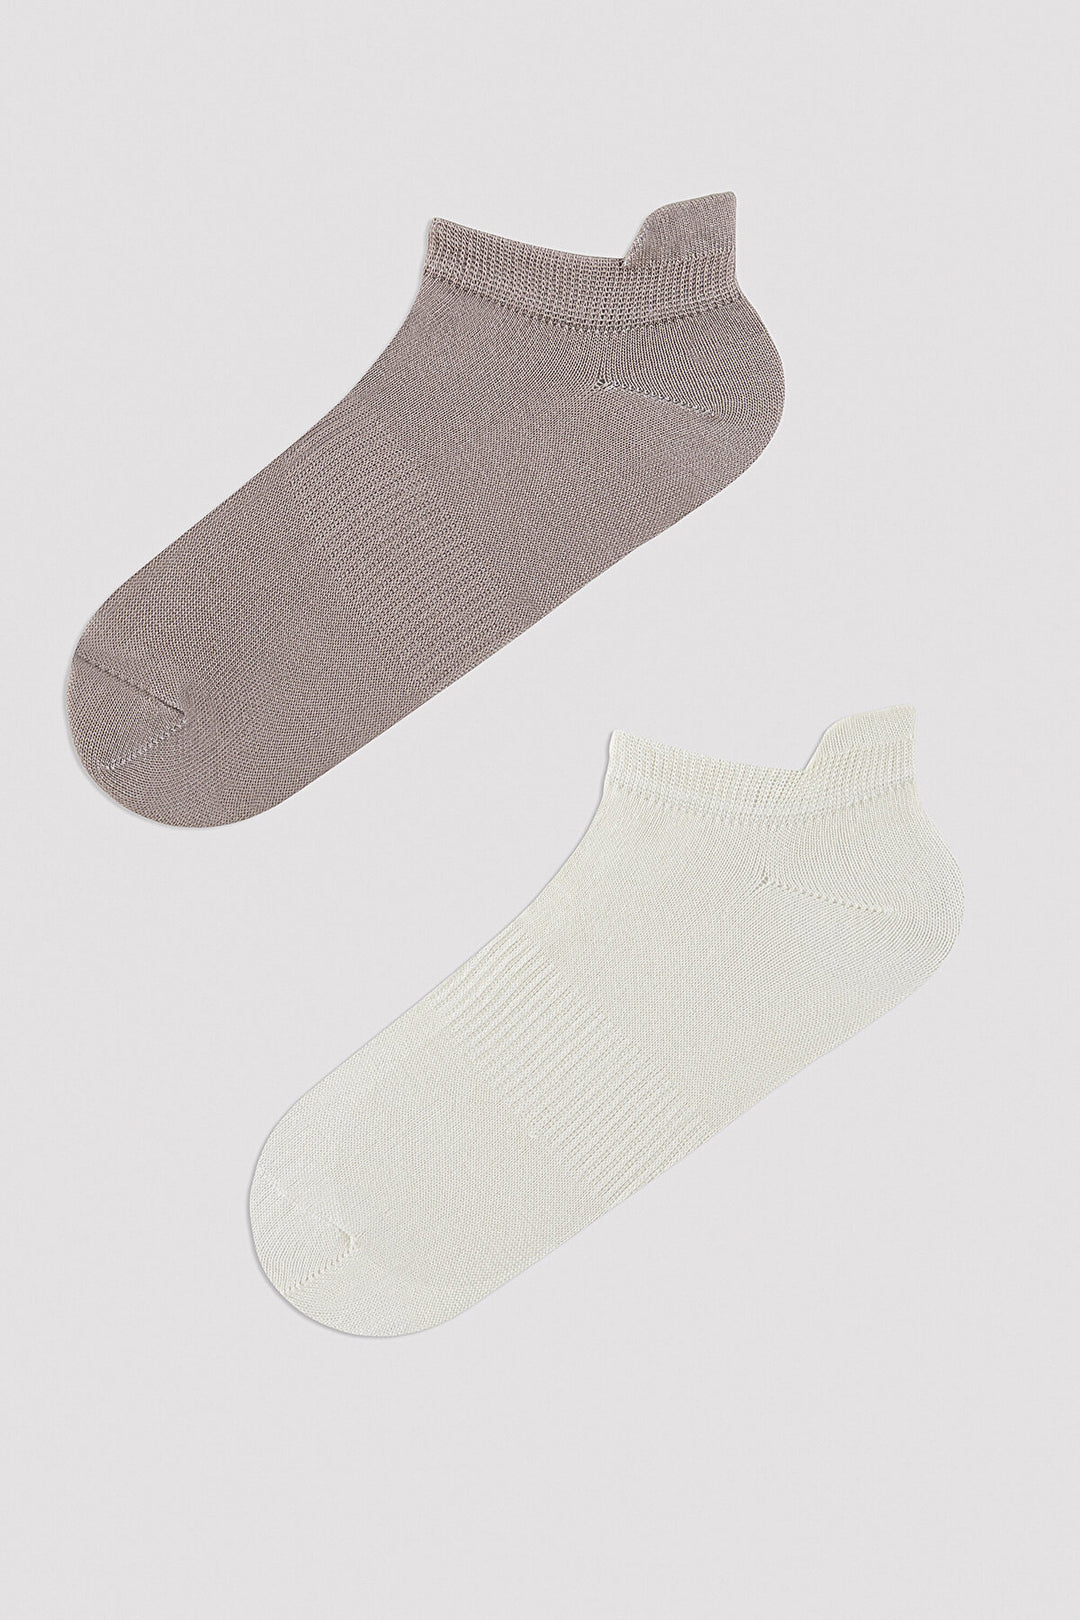 Rear Tab 2in1 Liner Socks